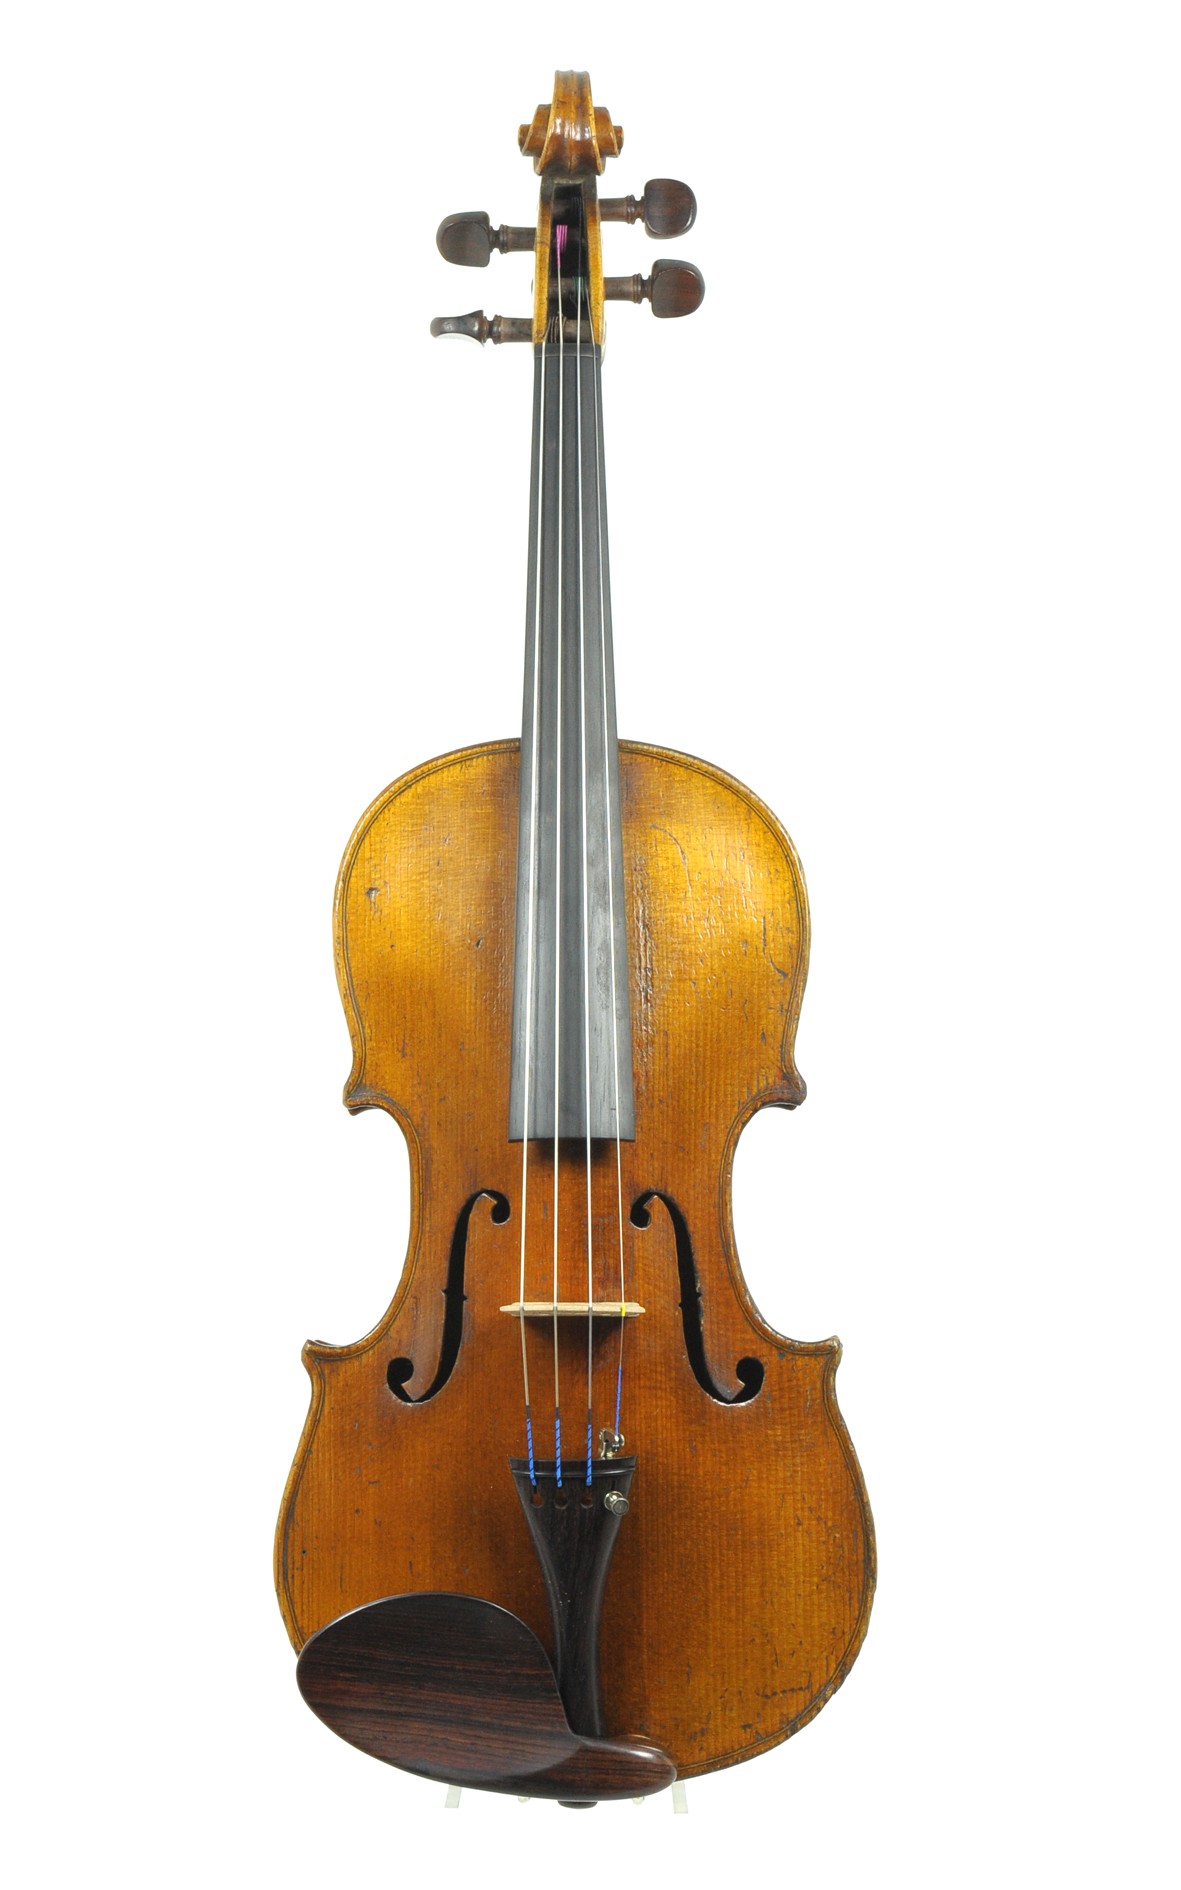 Klingenthal violin, approx. 1850